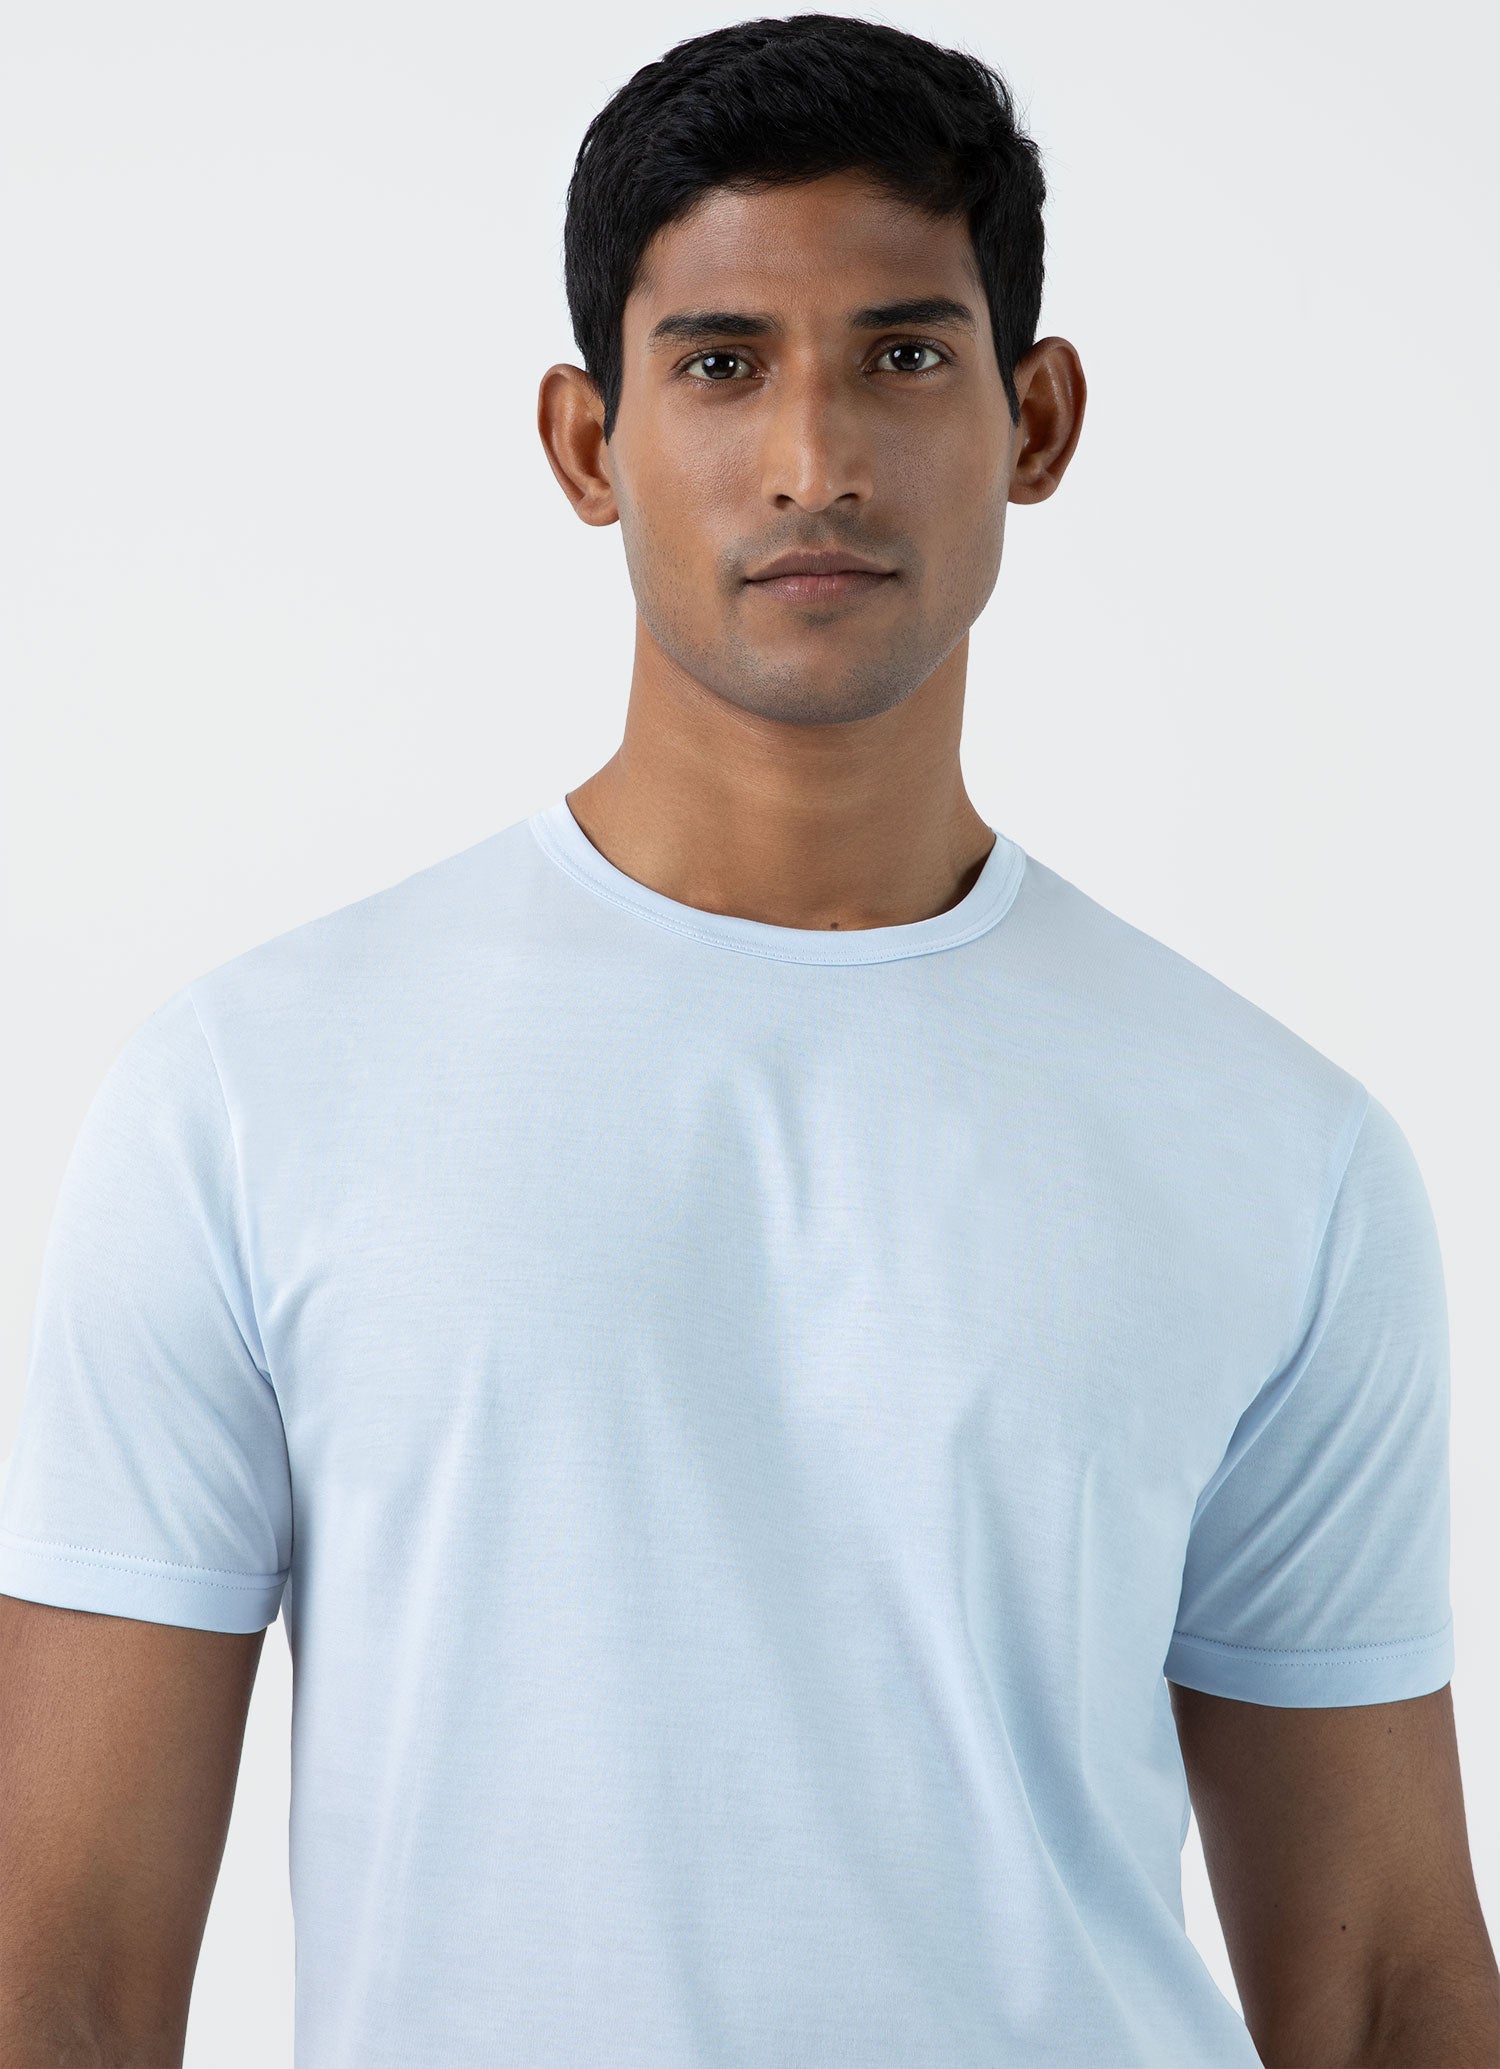 Men's Classic T-shirt in Light Blue